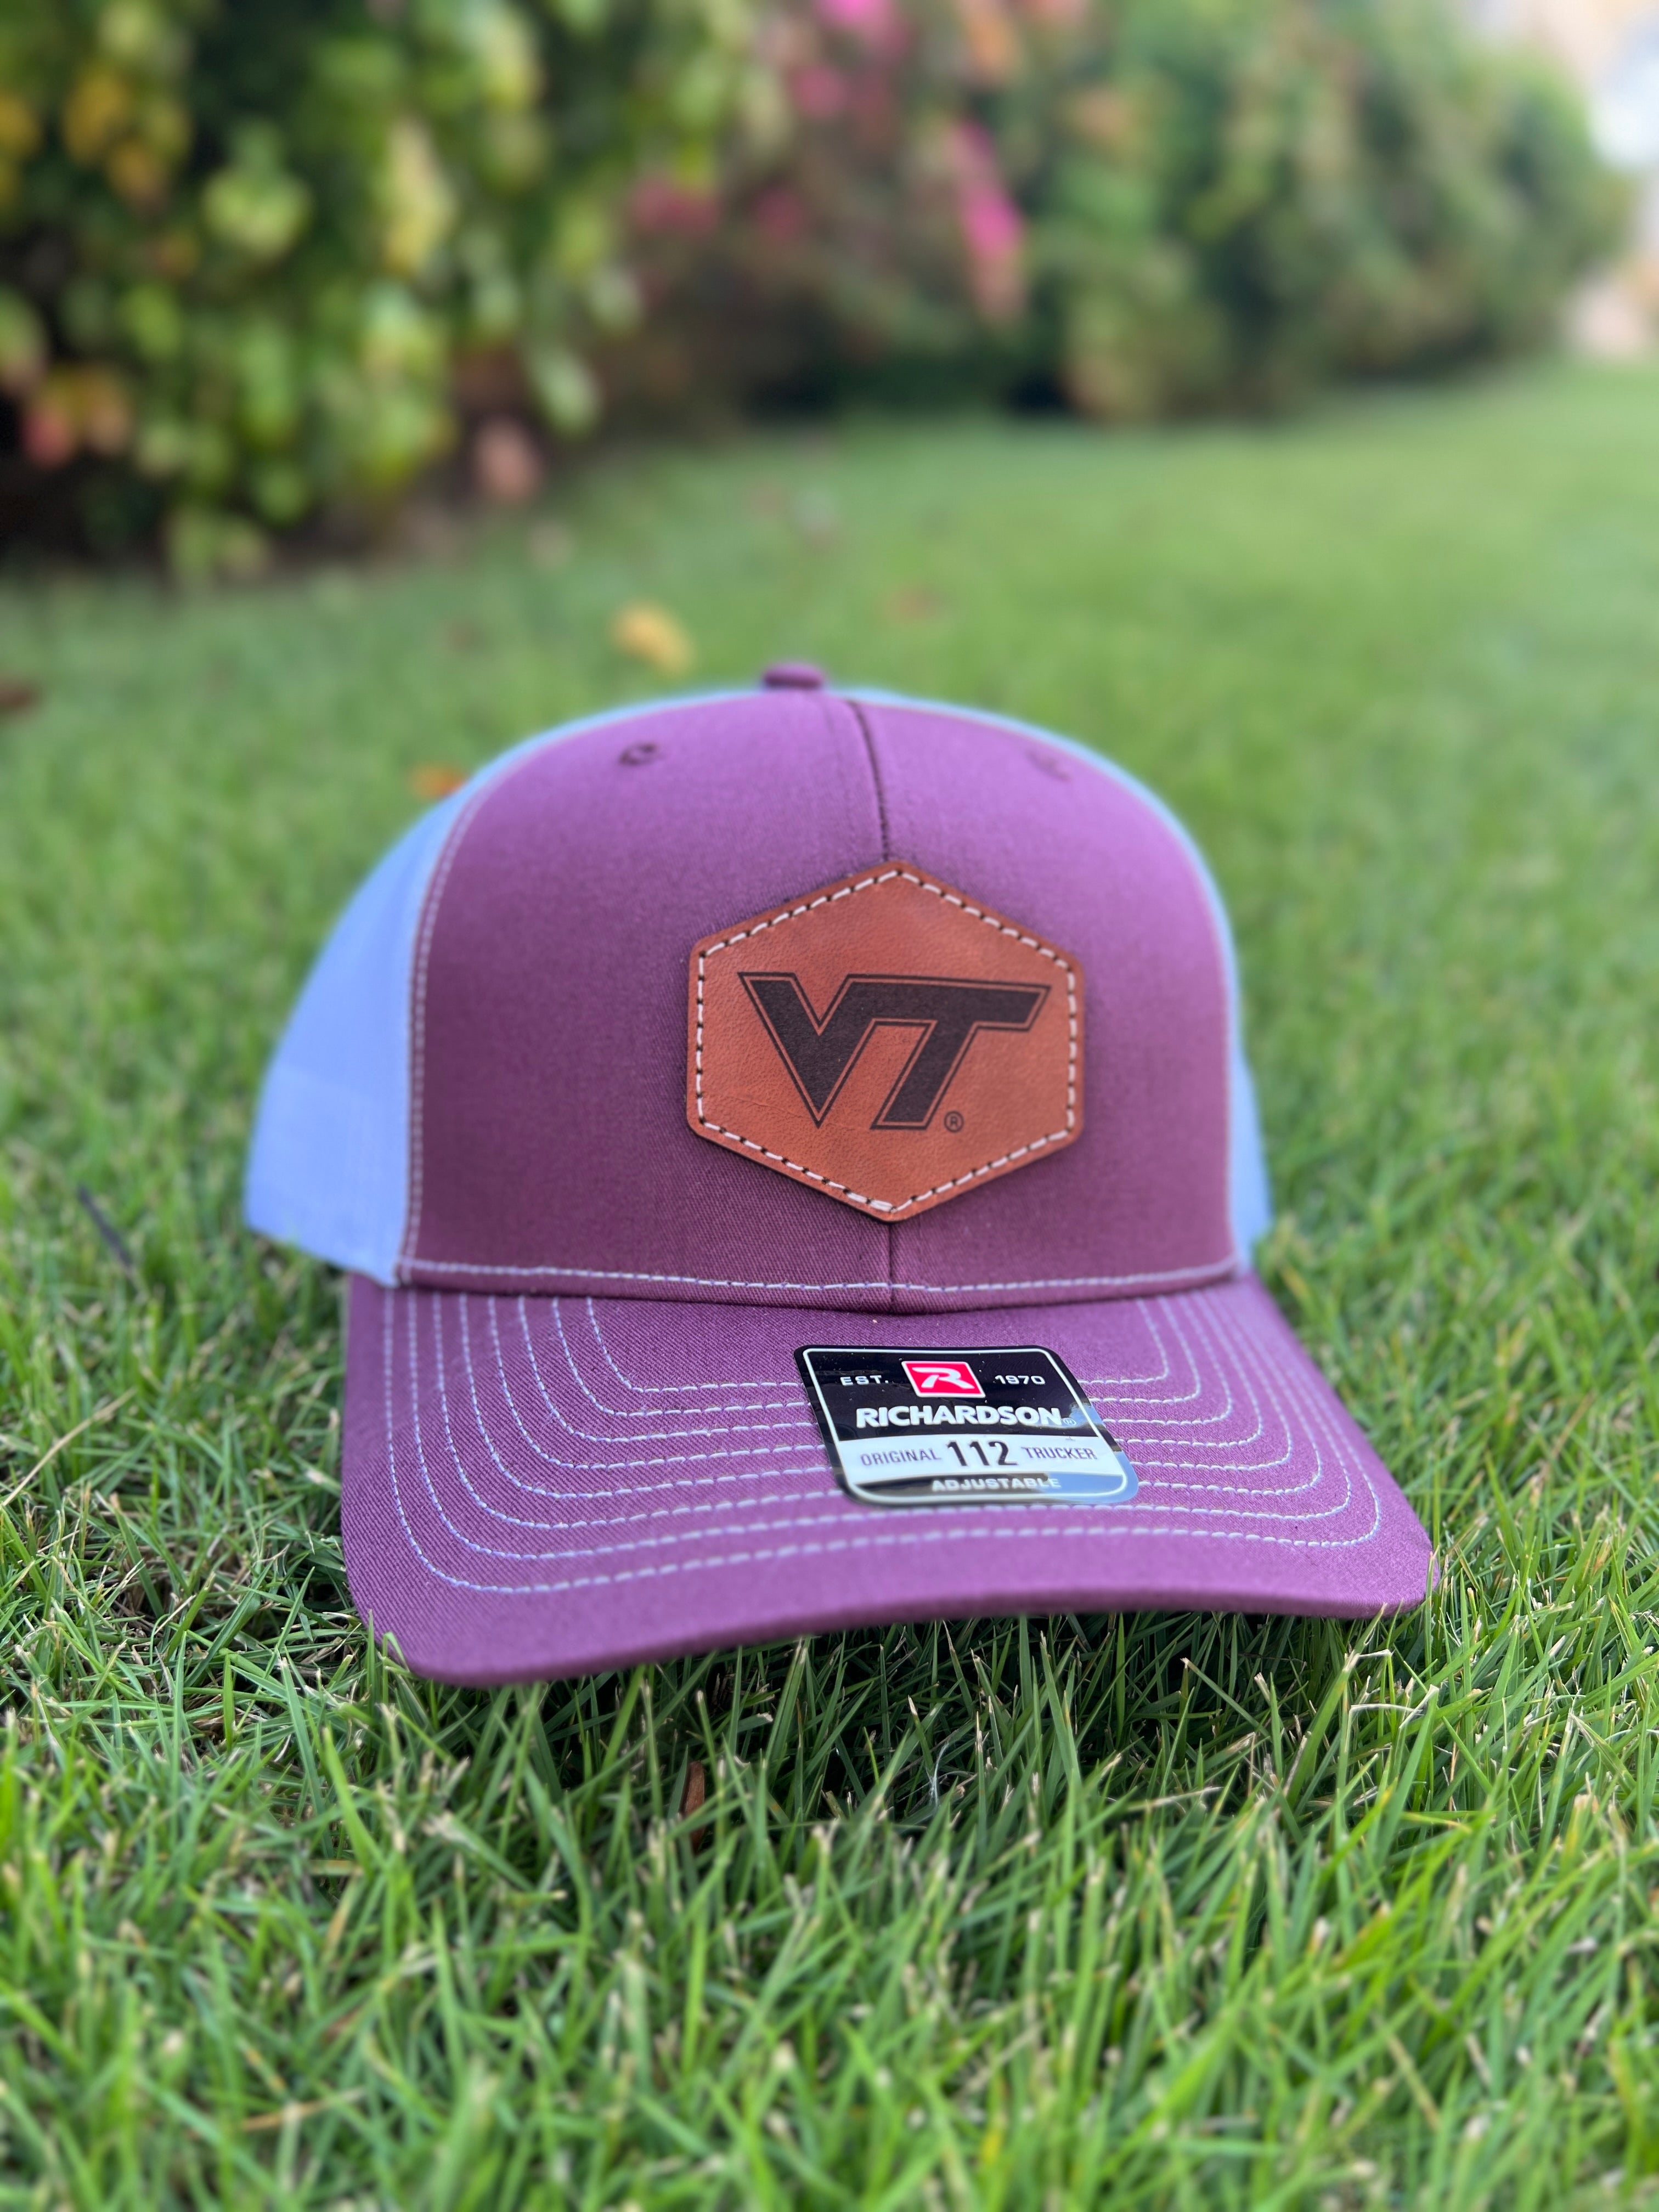 Virginia Tech Leather Patch Trucker Hat Orange/White / Adjustable / VT Virginia Tech Patch